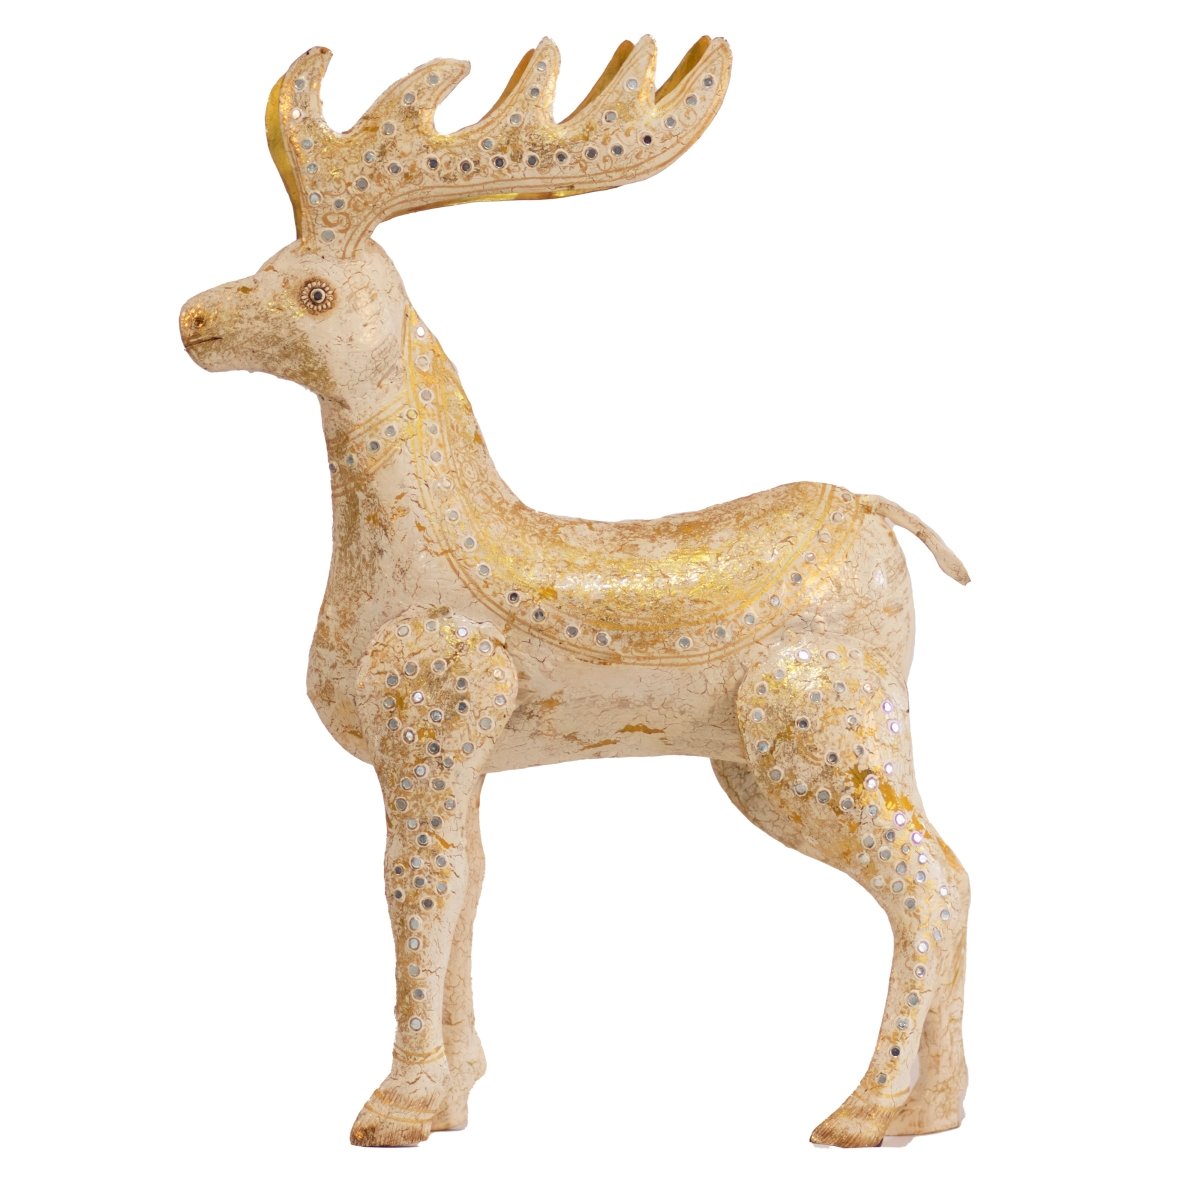 Kezevel Christmas Decoration Reindeer Statue - Artistic White and Golden Metal Deer Showpieces for Home Decor, Deer Figurine